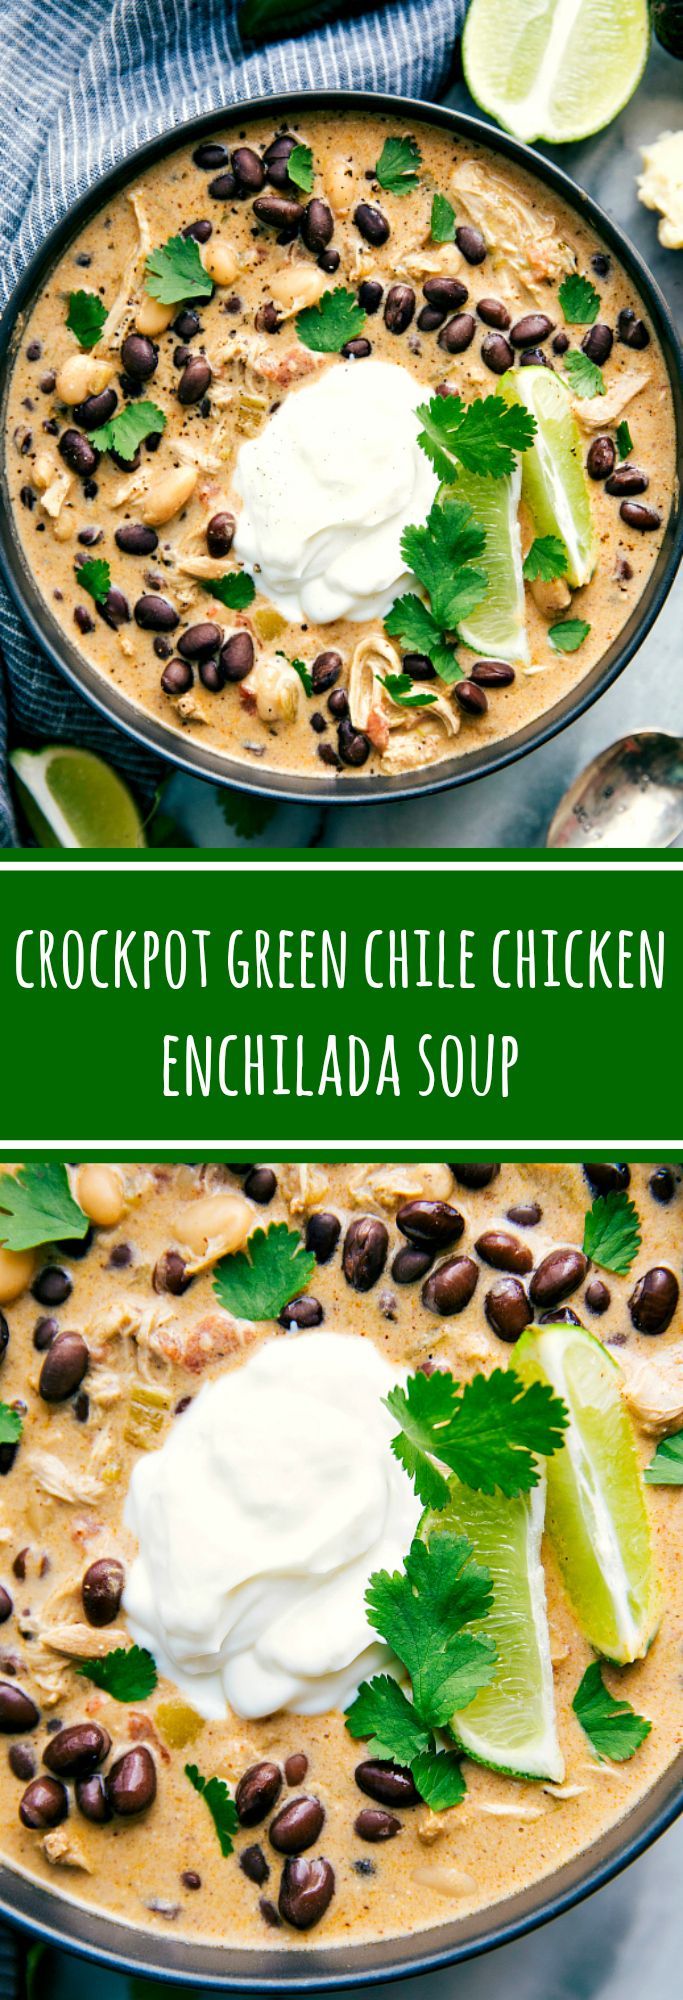 Crockpot Green Chile Chicken Enchilada Soup — your favorite green chile chicken enchiladas in a cream